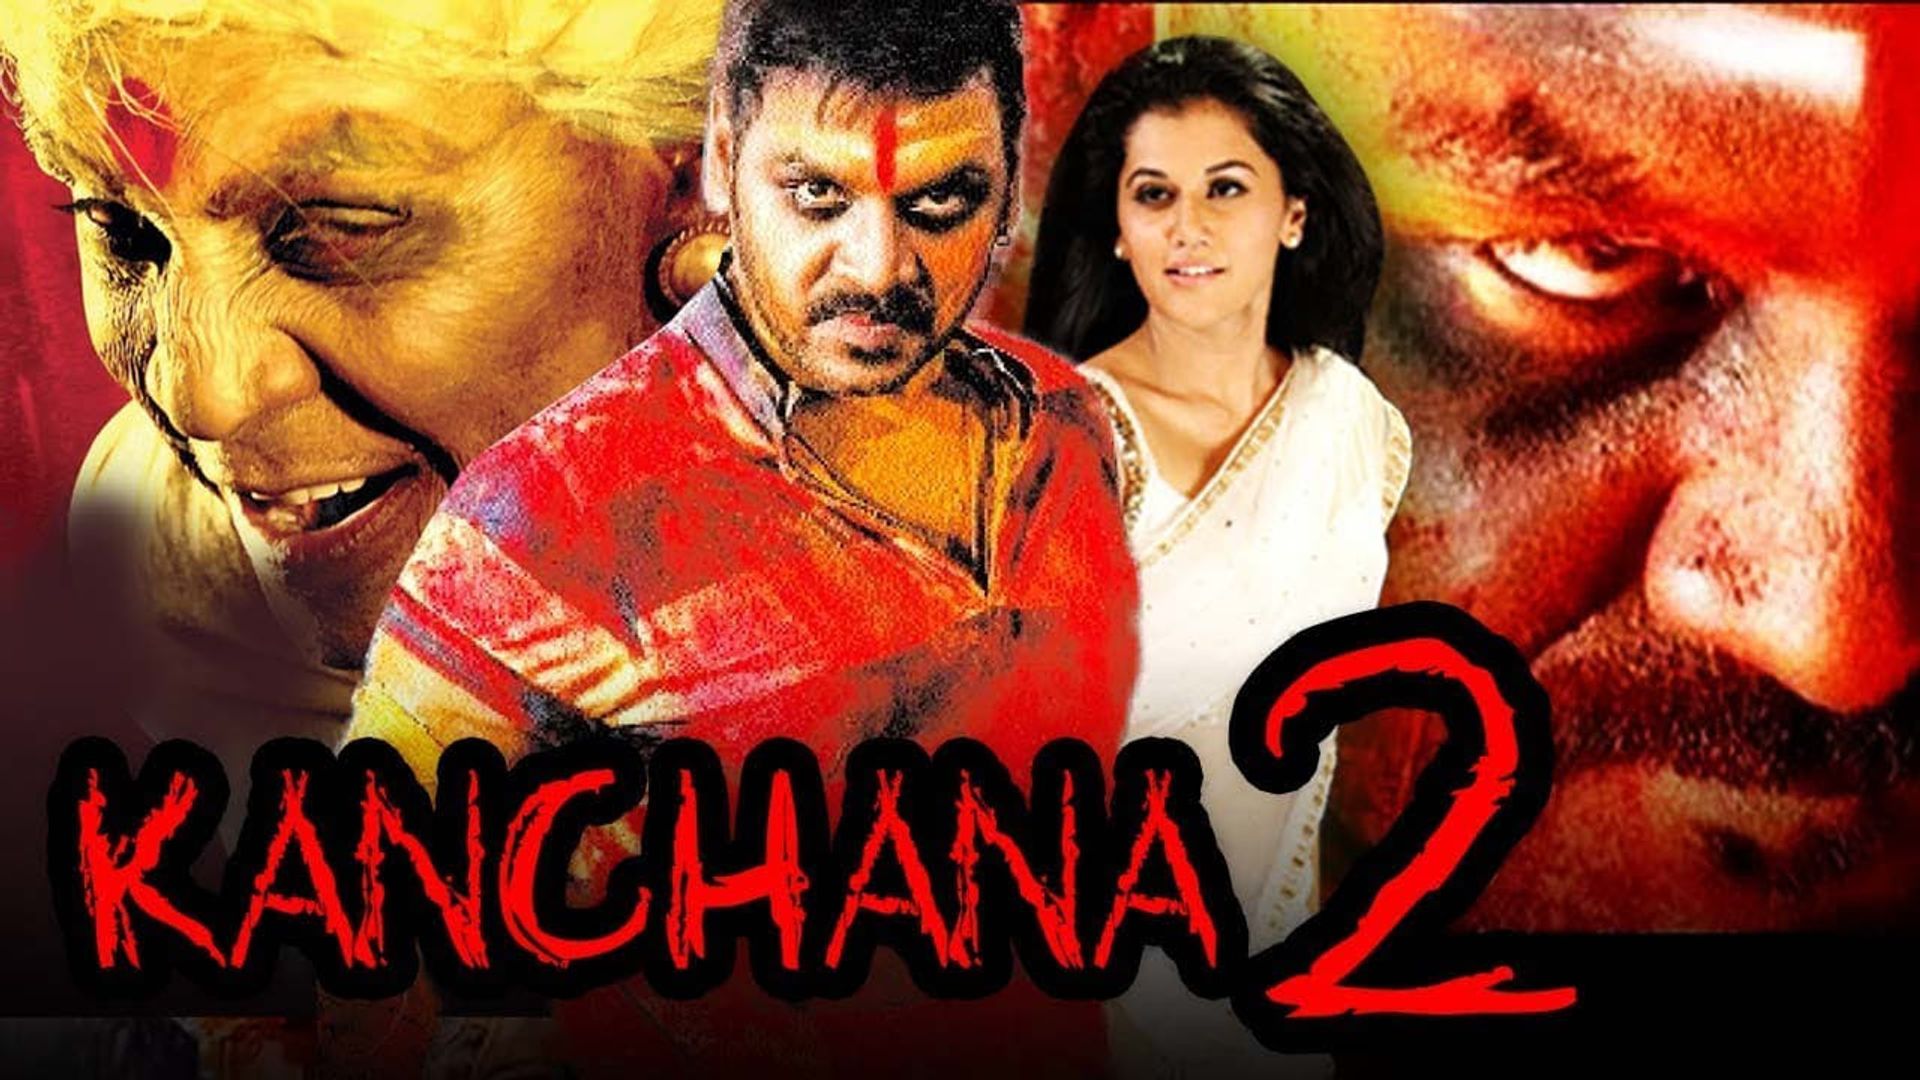 Kanchana 2 background